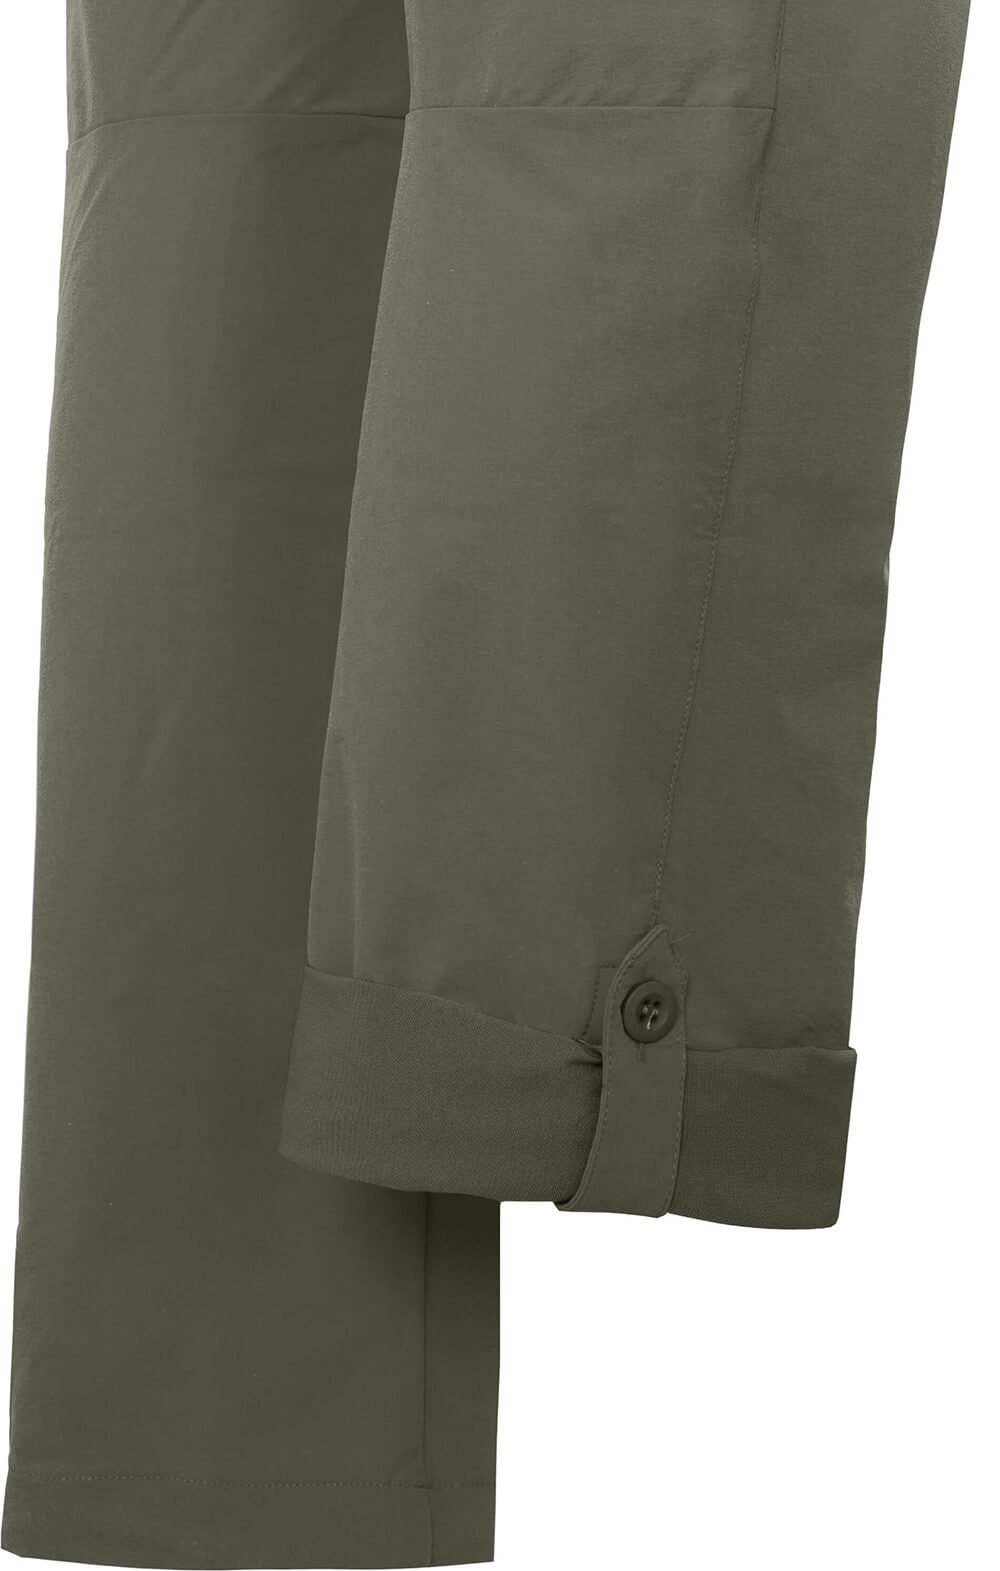 Bergson Outdoorhose VIDAA leicht, grau/grün COMFORT Damen Normalgrößen, strapazierfähig, Wanderhose